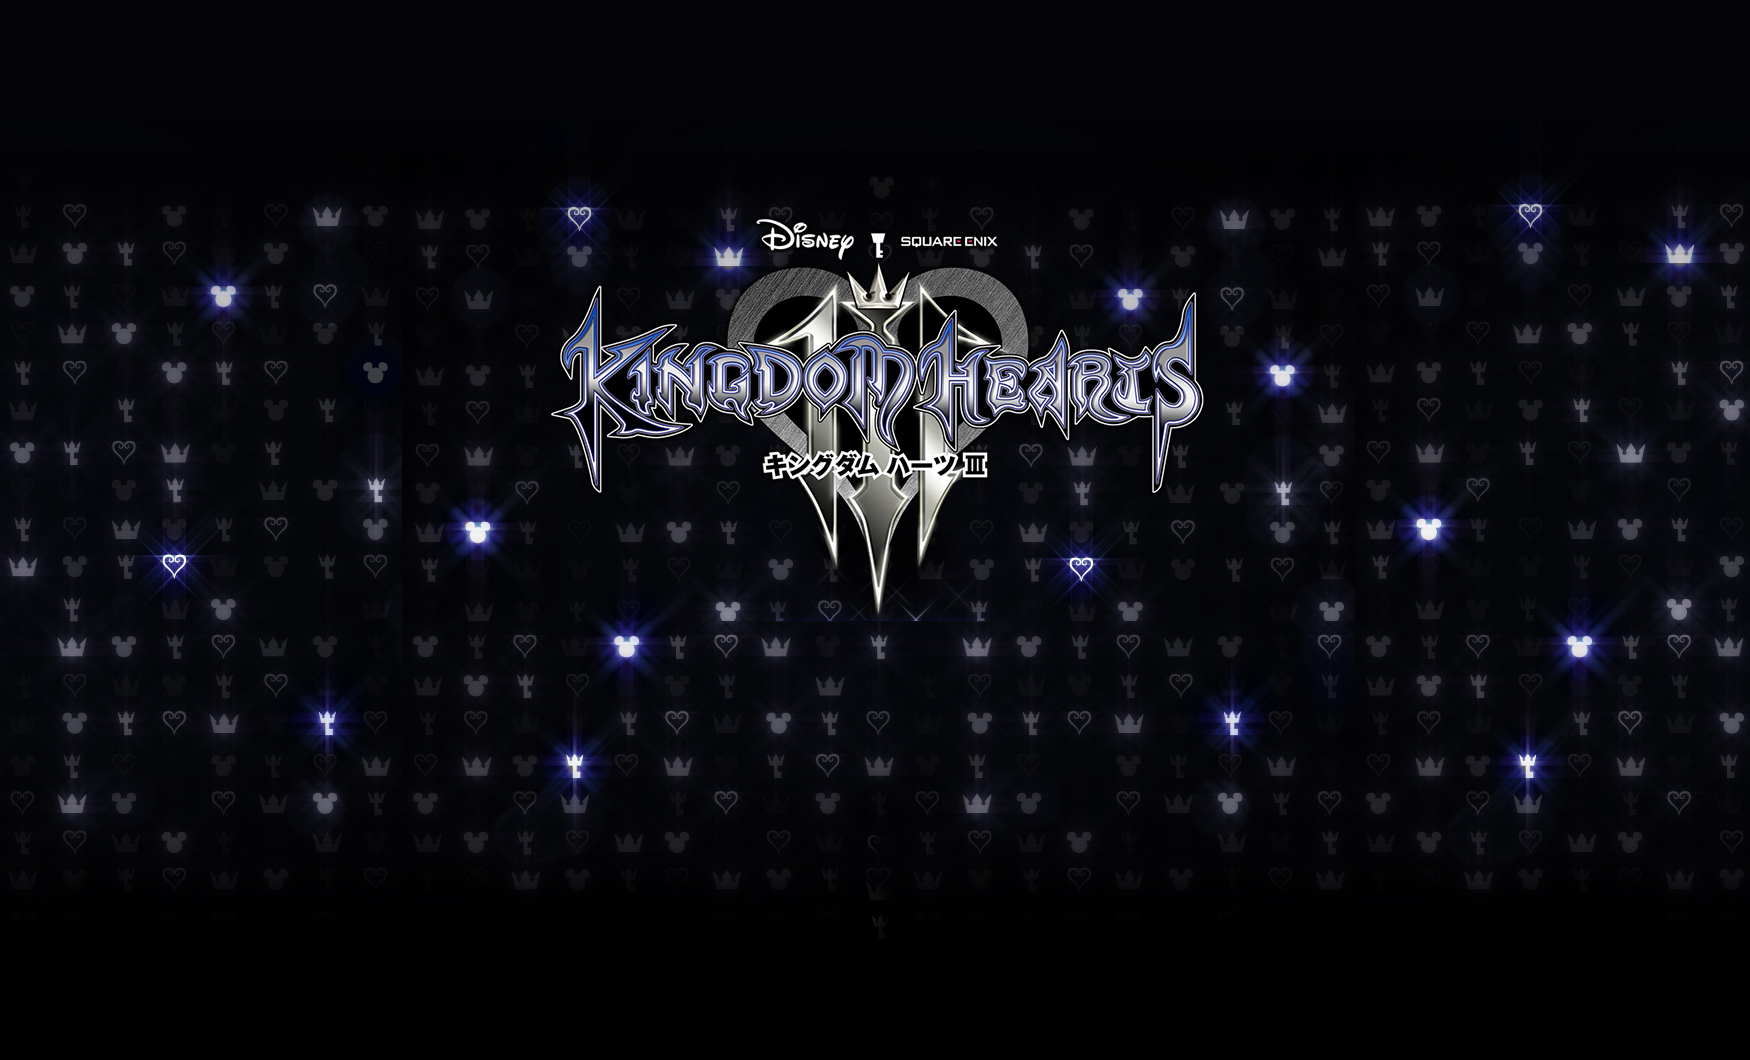 download kingdom hearts hd 1.5